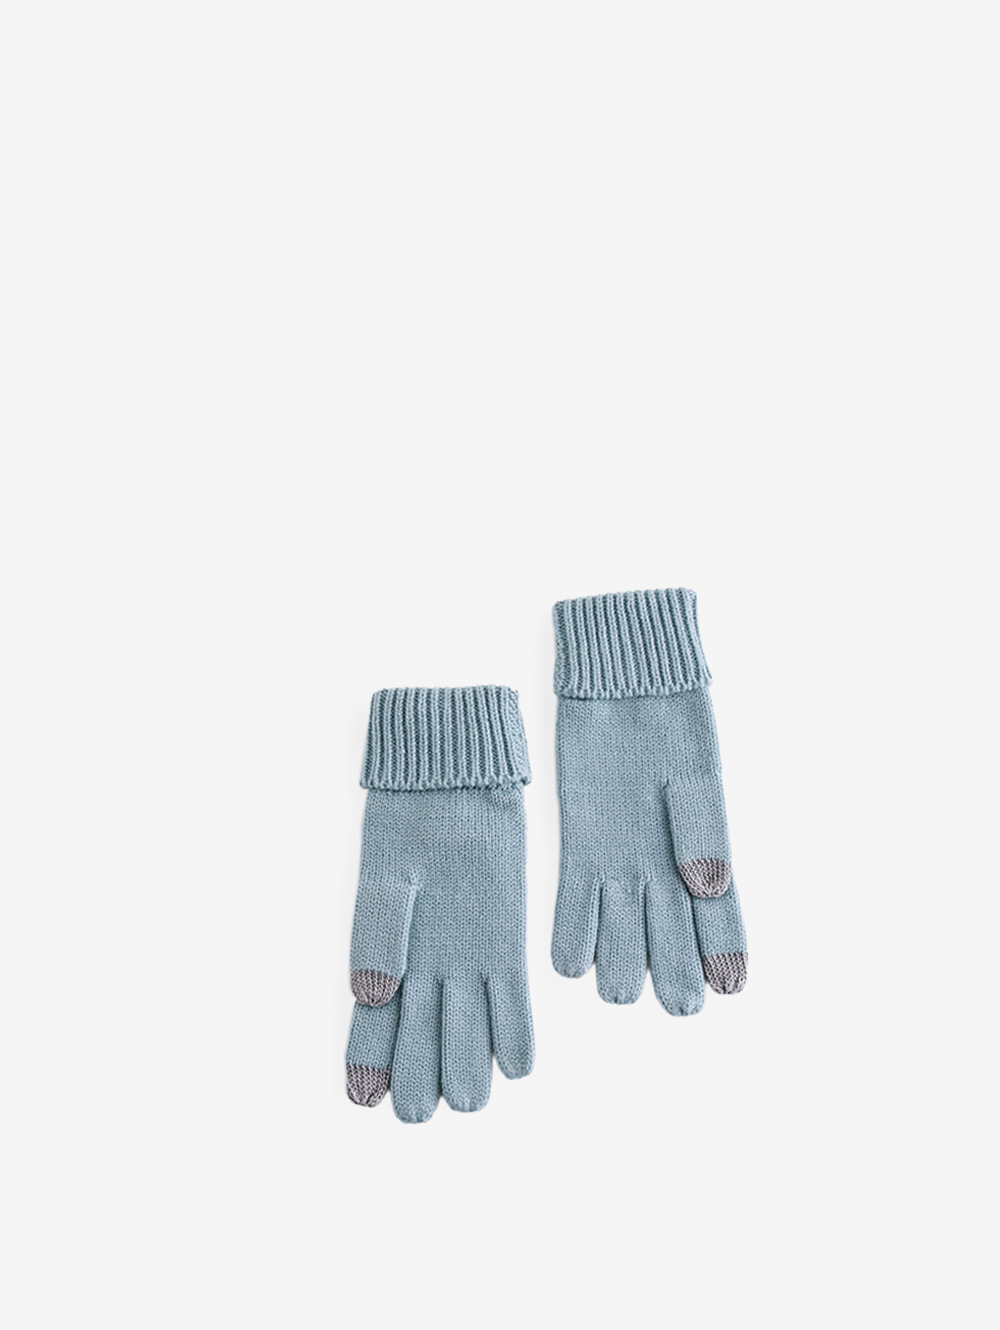 HUNTER 配件-PLAY素面針織手套(湖水藍)評價推薦